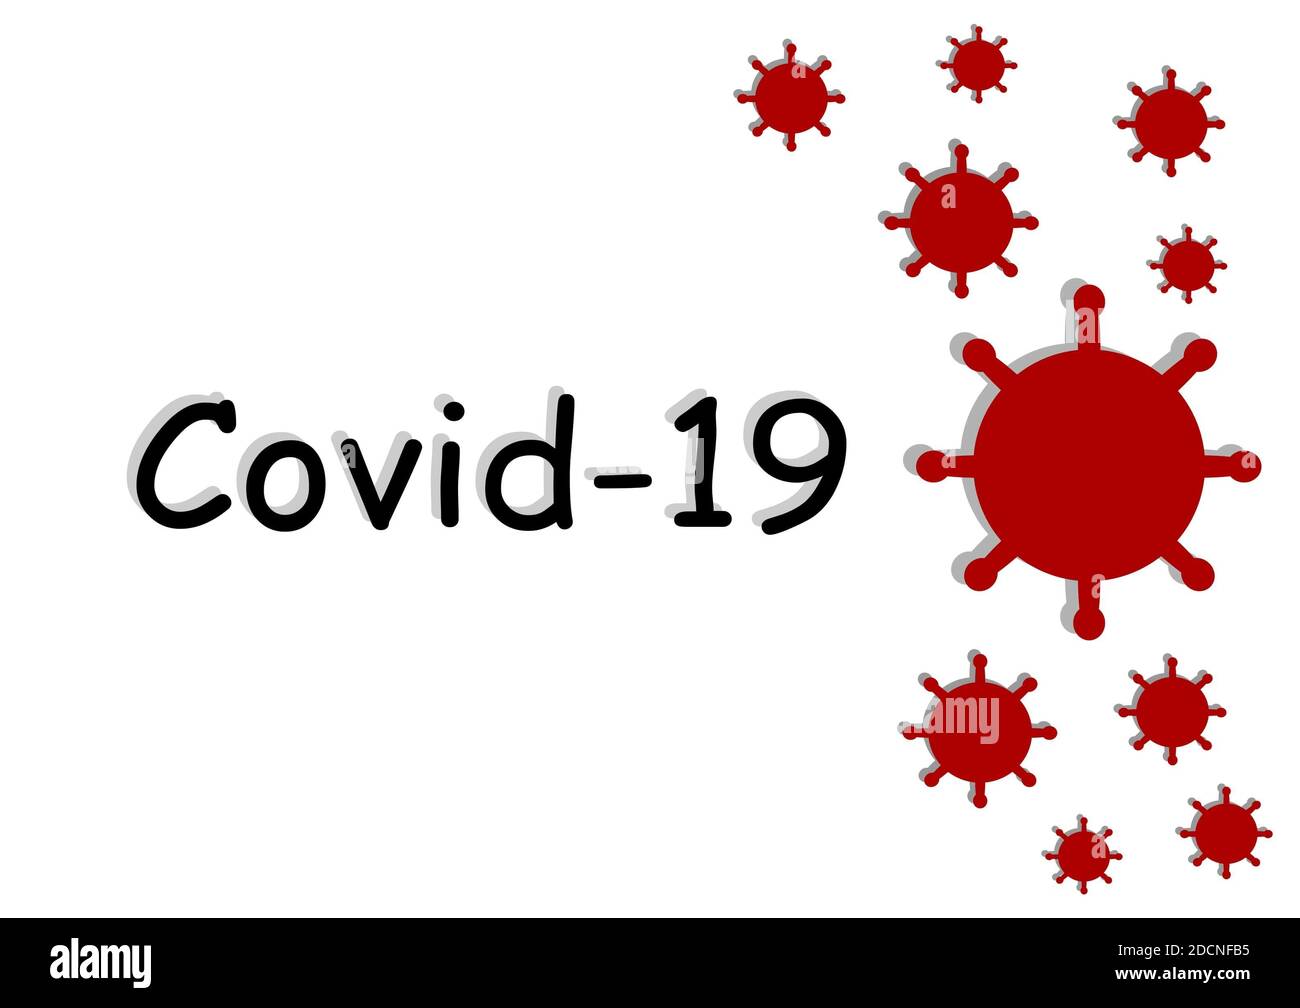 Covid-19 banner design. Red coronavirus illustration. Stock Photo